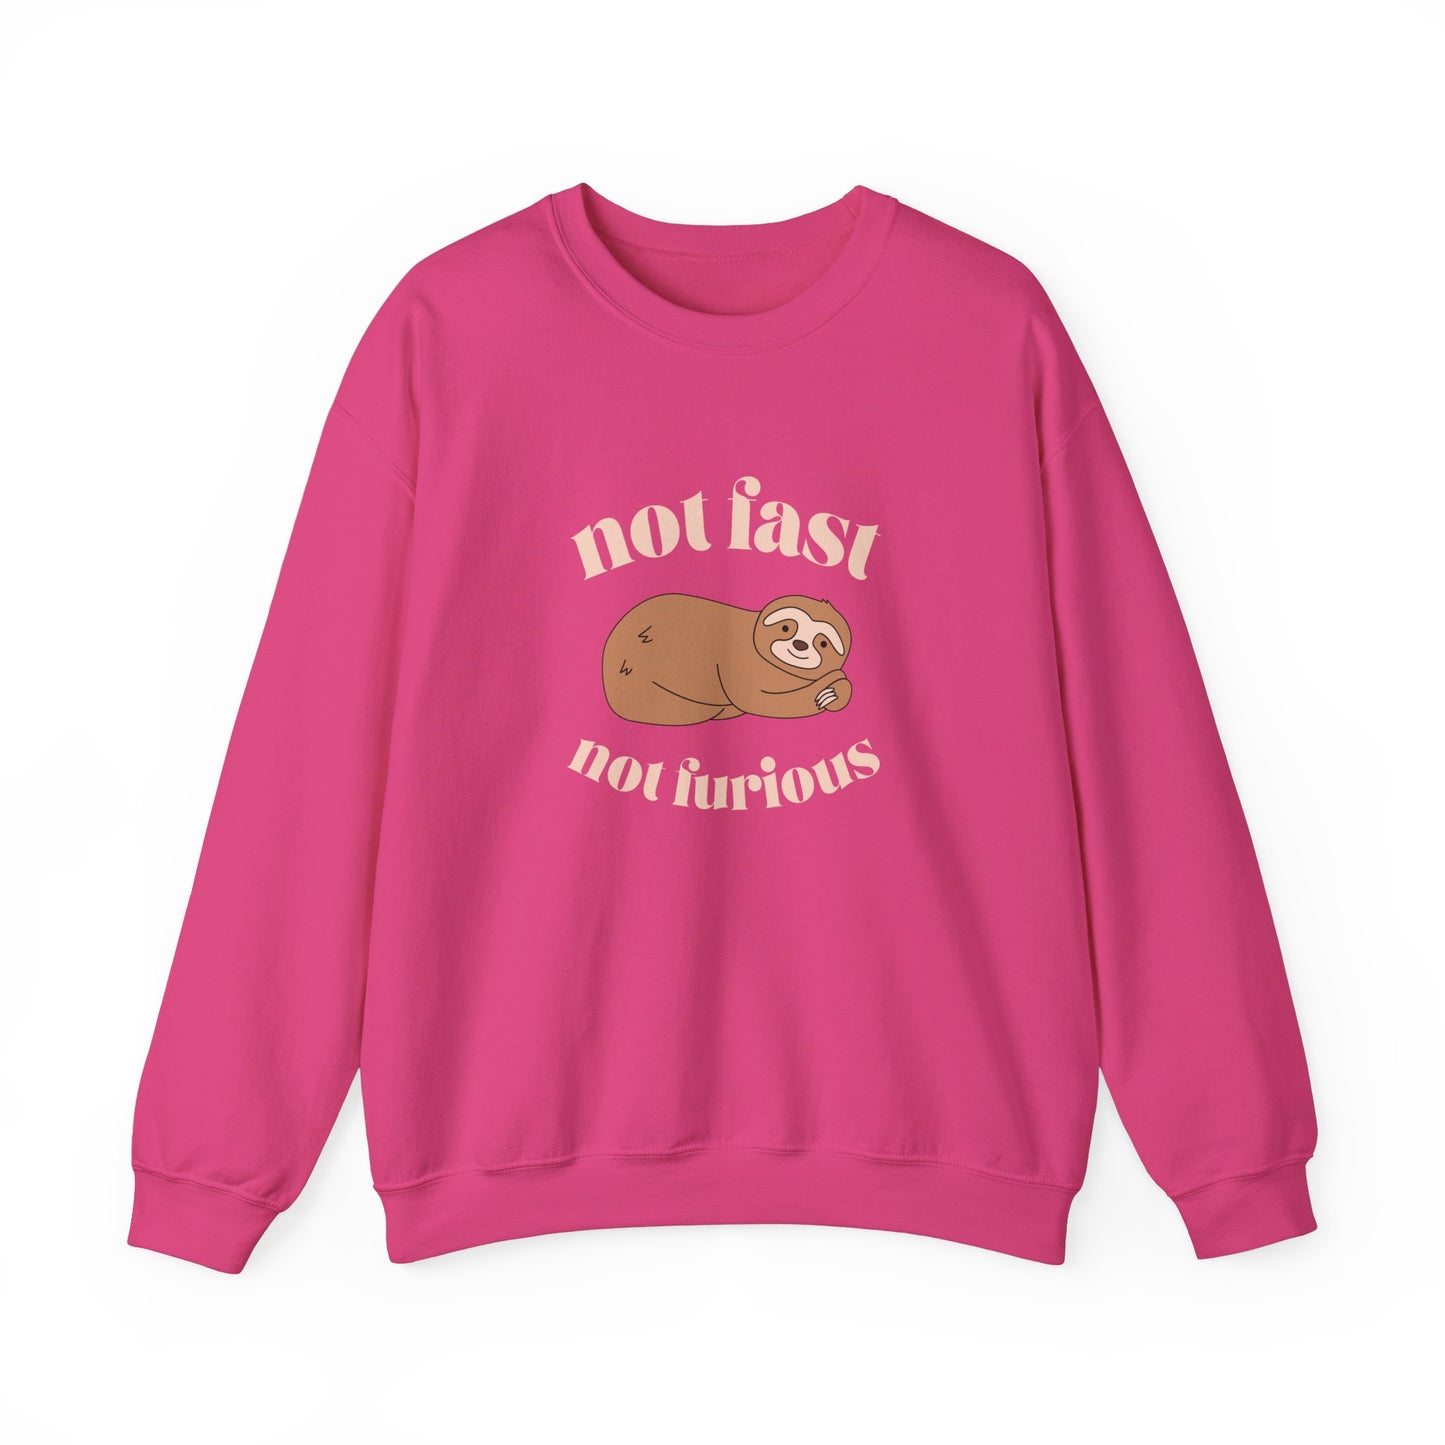 Sweatshirt not fast not furious